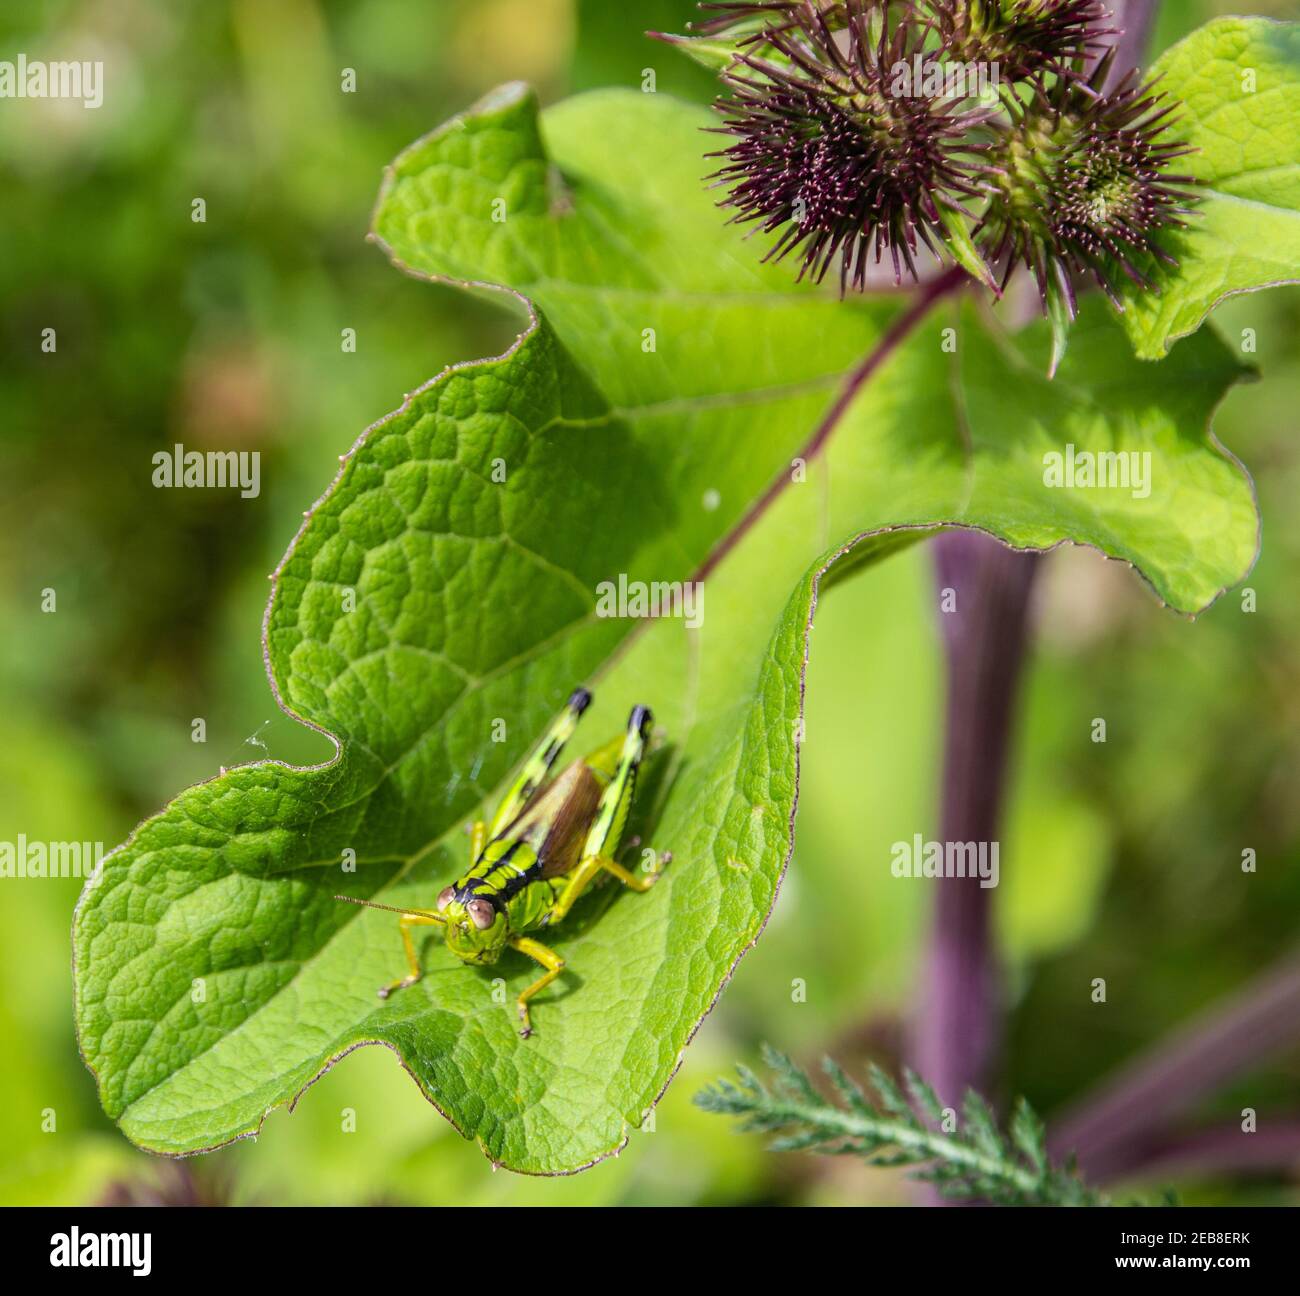 Alpine Miramella Grasshopper auf dem grünen Blatt. Selektiver Fokus Stockfoto